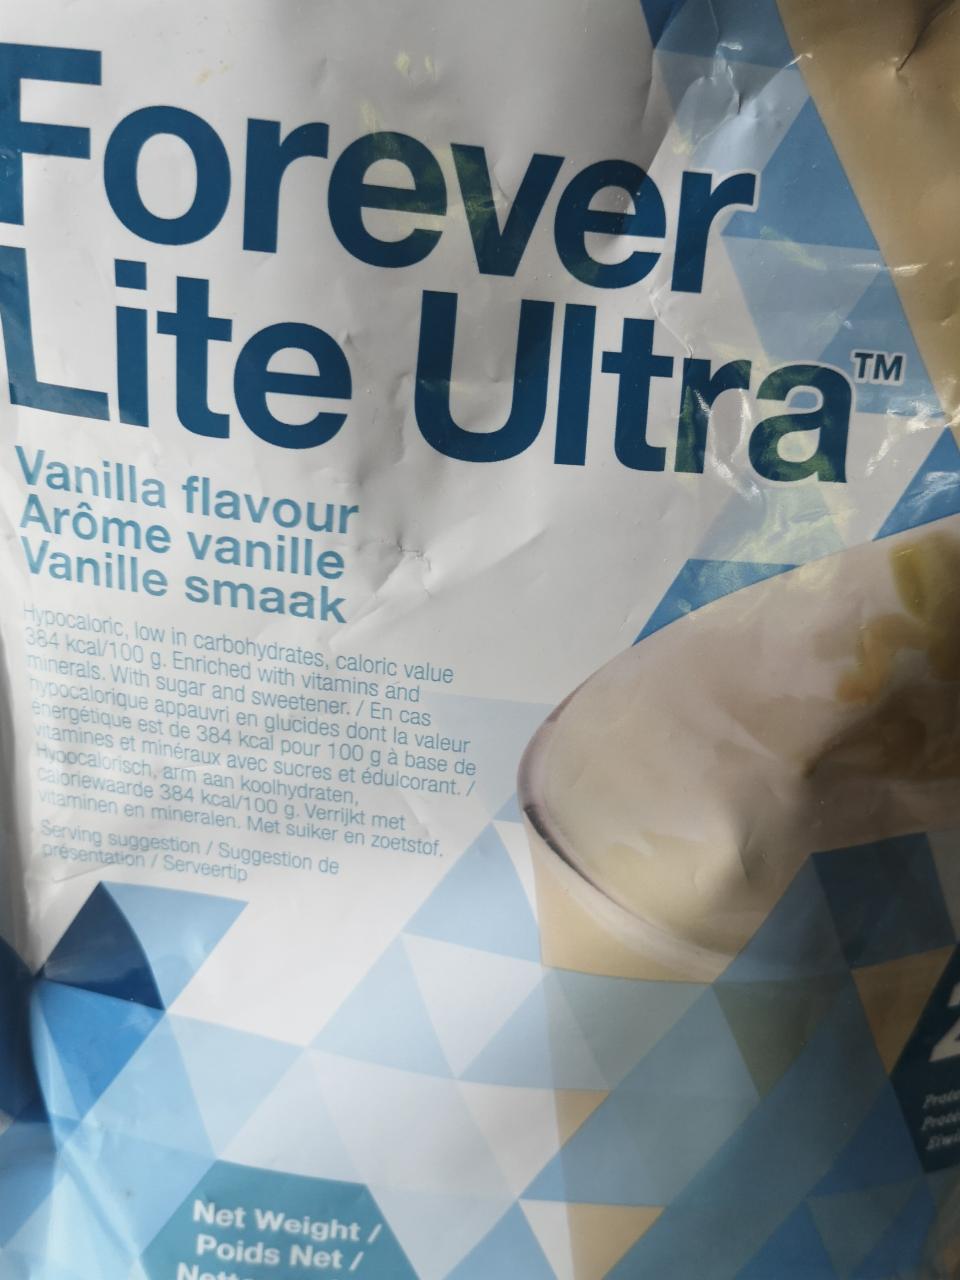 Zdjęcia - Forever Lite Ultra Vanilla flavour